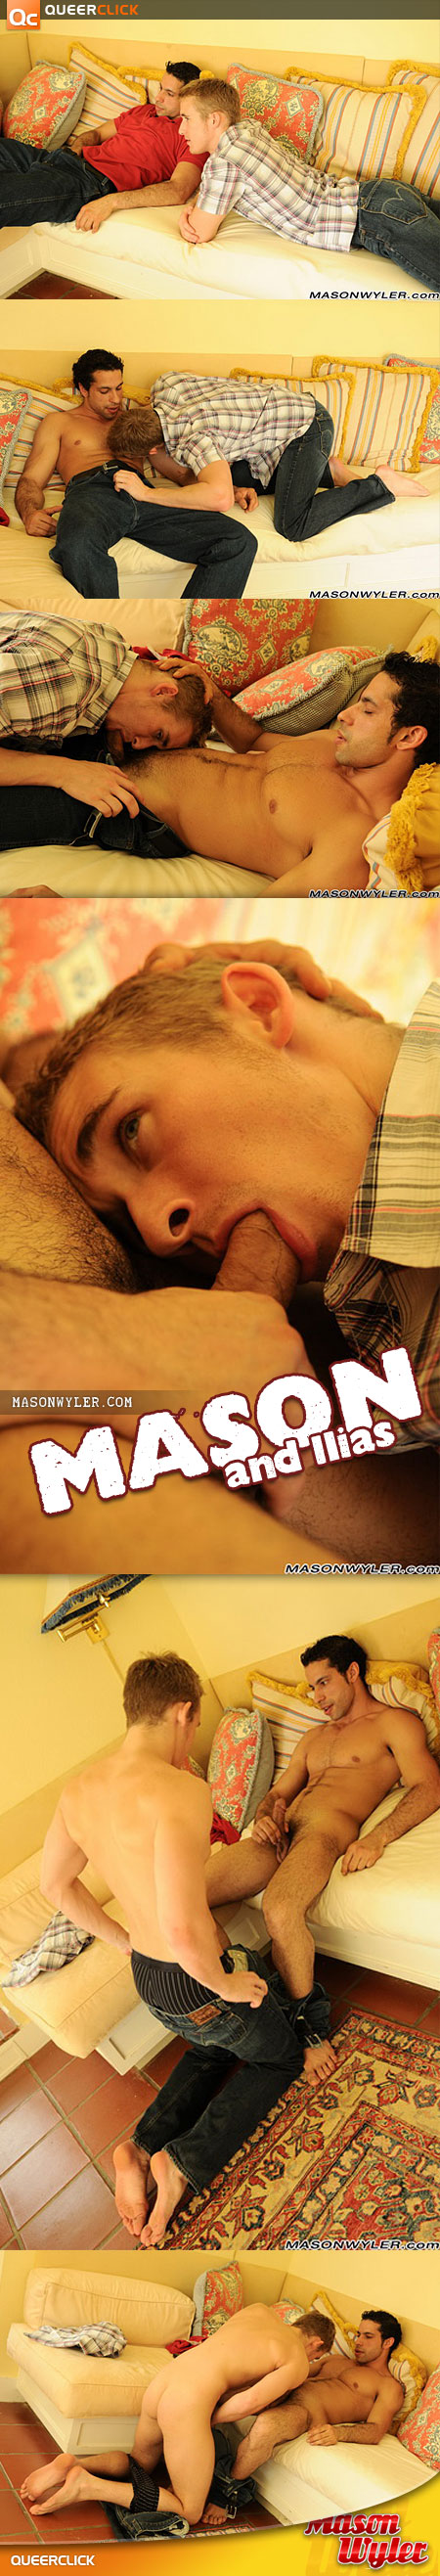 Mason Wyler: Mason and Ilias